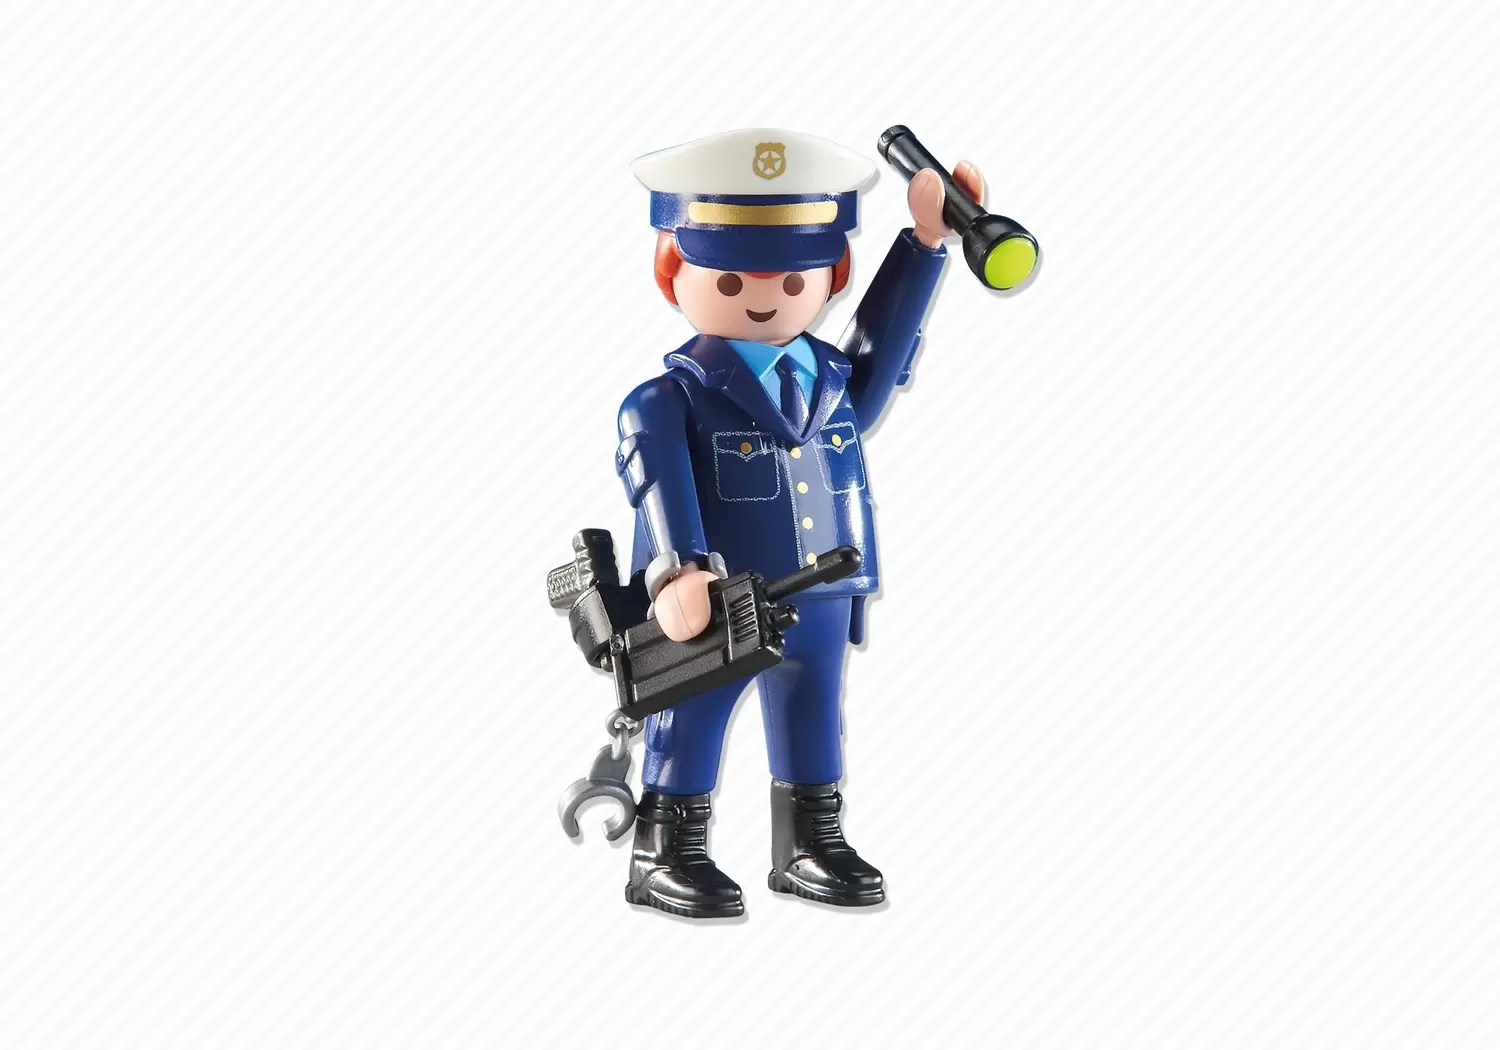 Police Playmobil - Police Chief